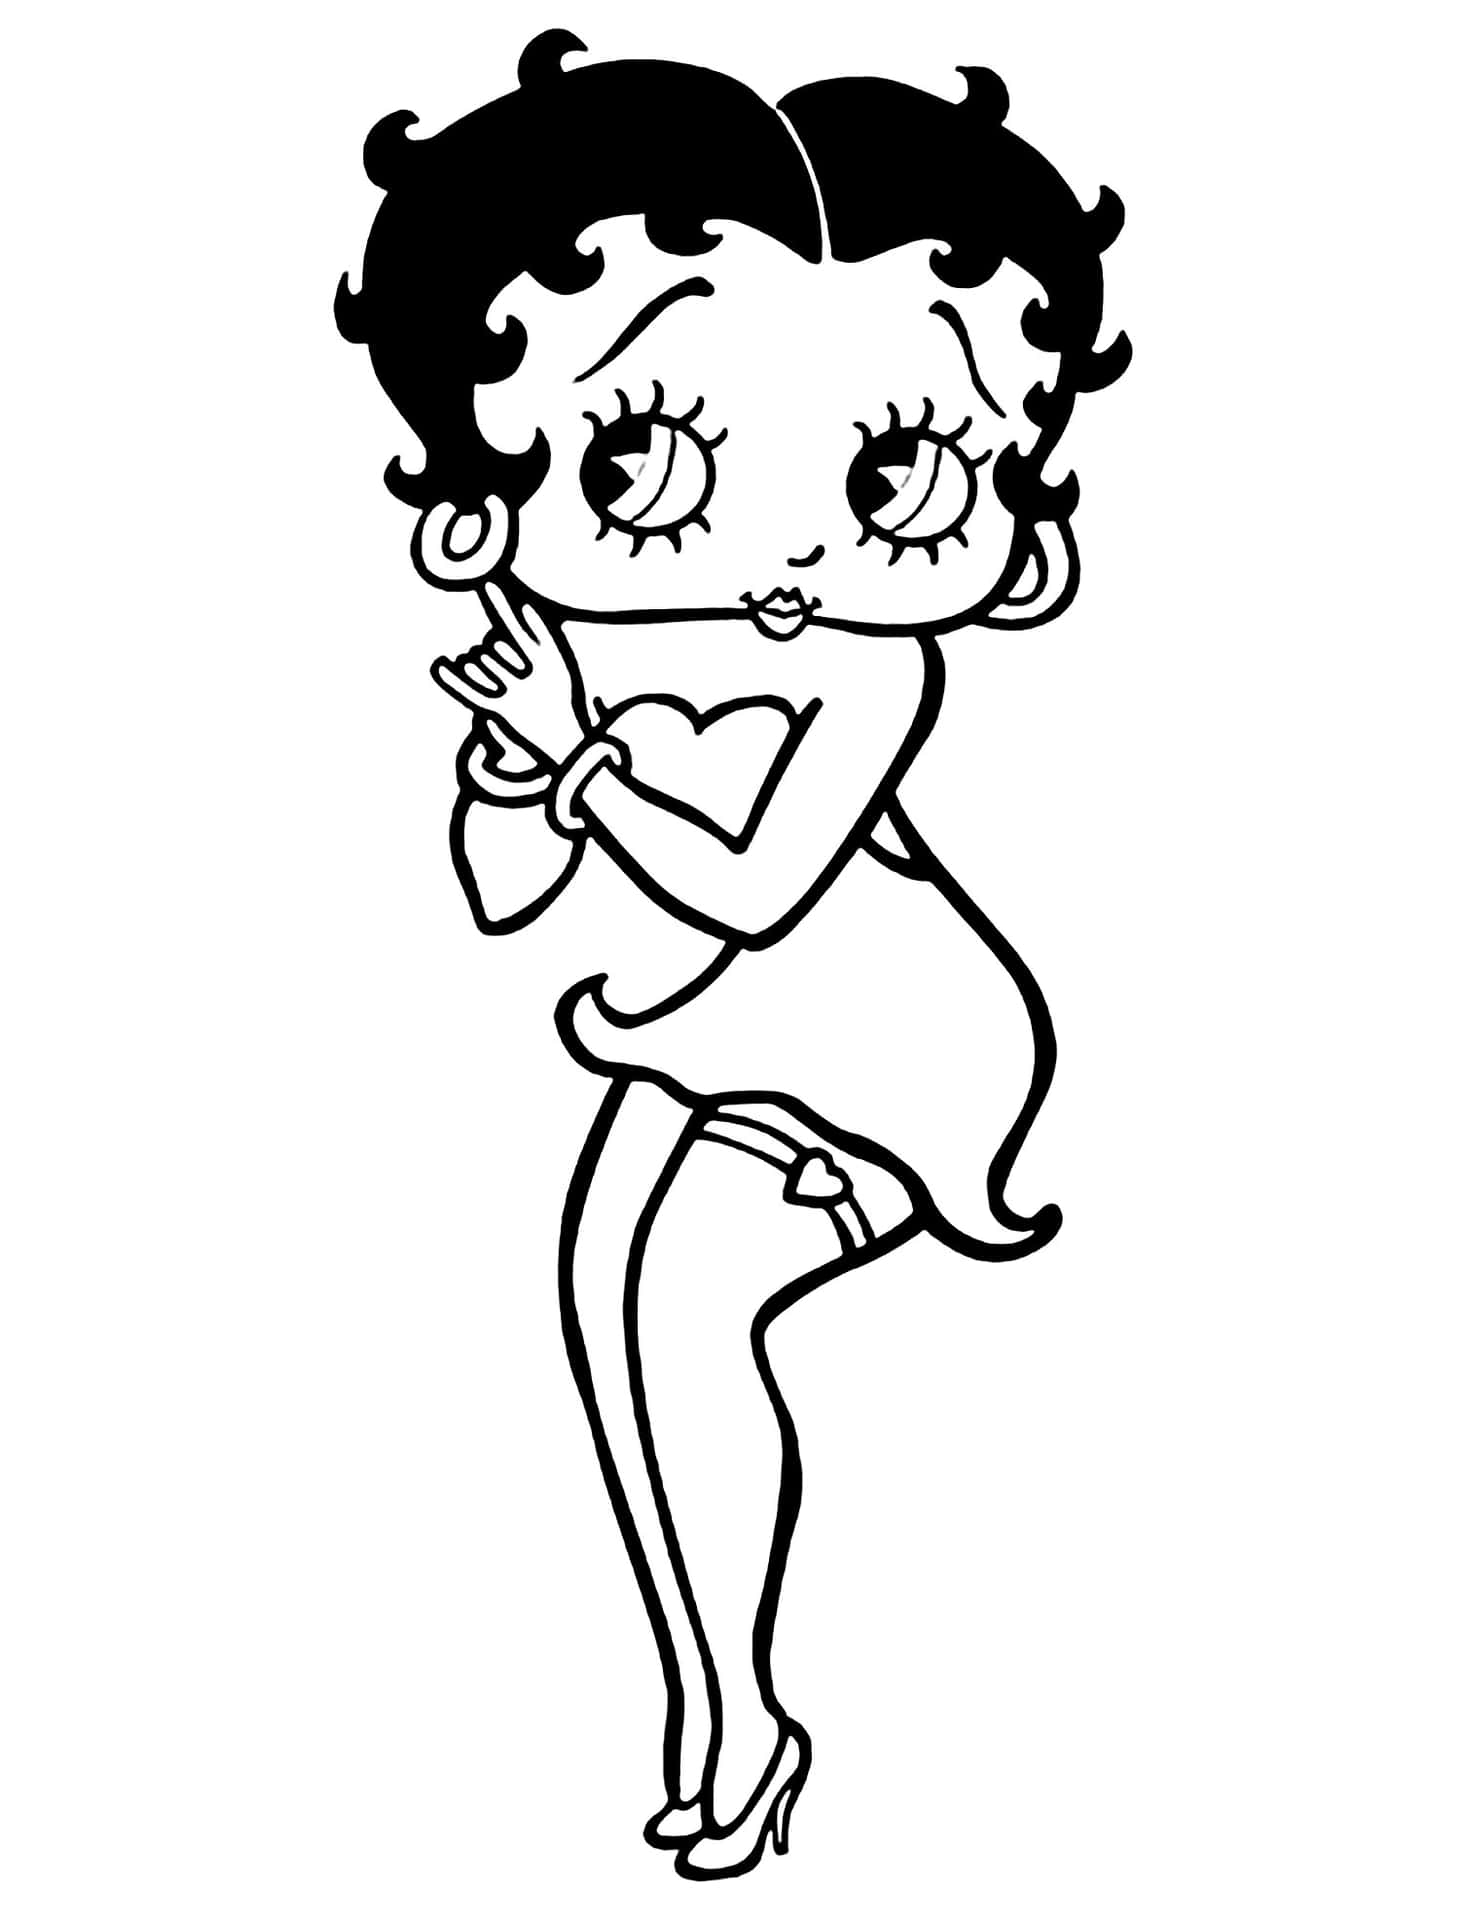 Betty Boop's classic cartoon look